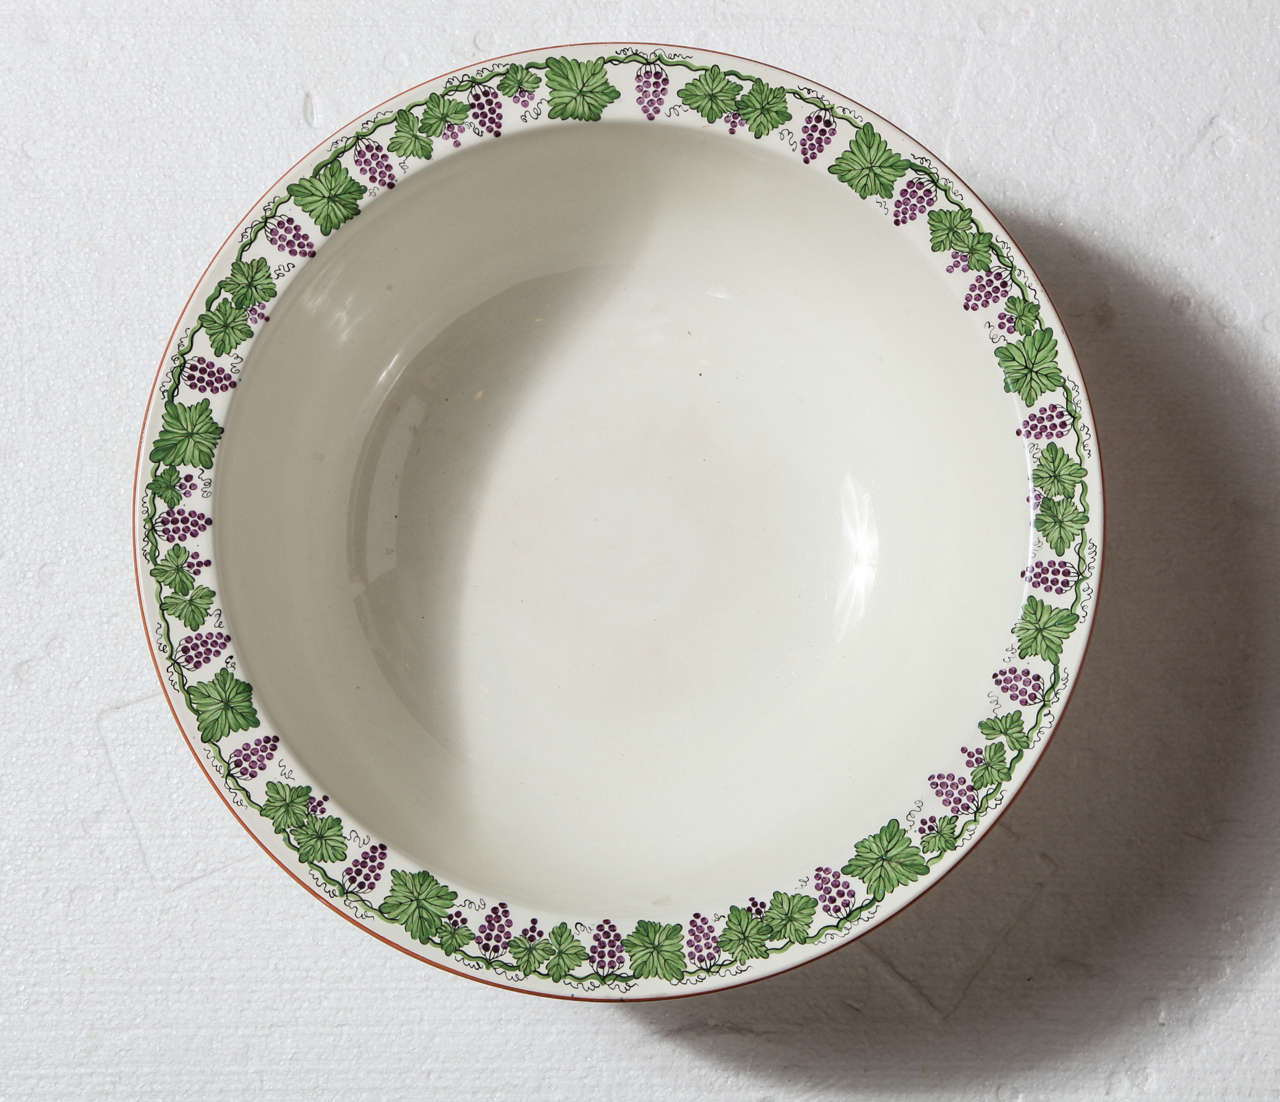 19th Century Creamware Bowl With Grapevine